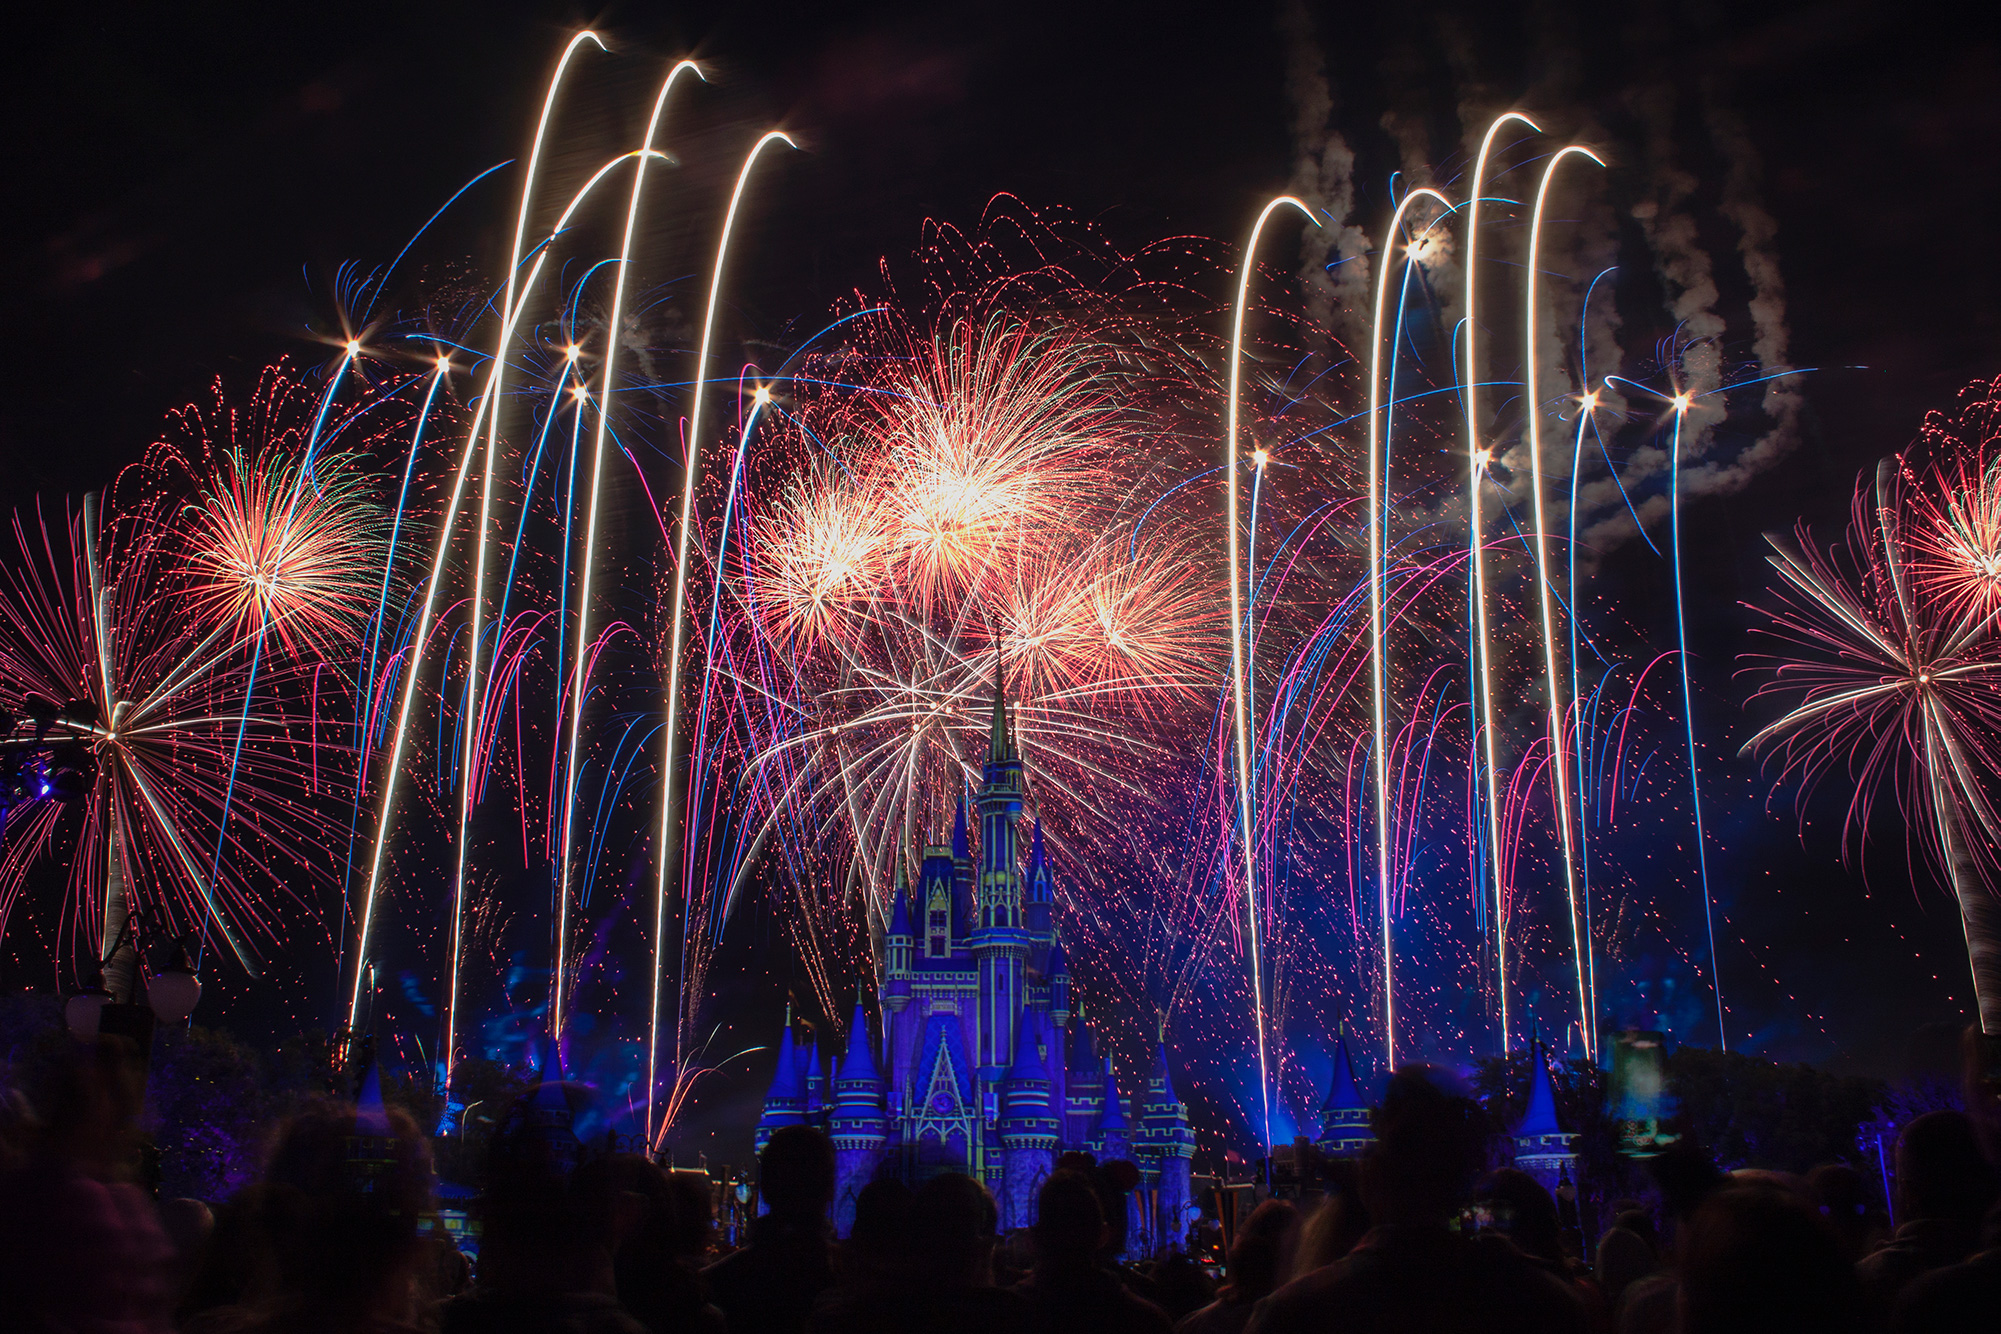 Cinderella Castle with Fireworks